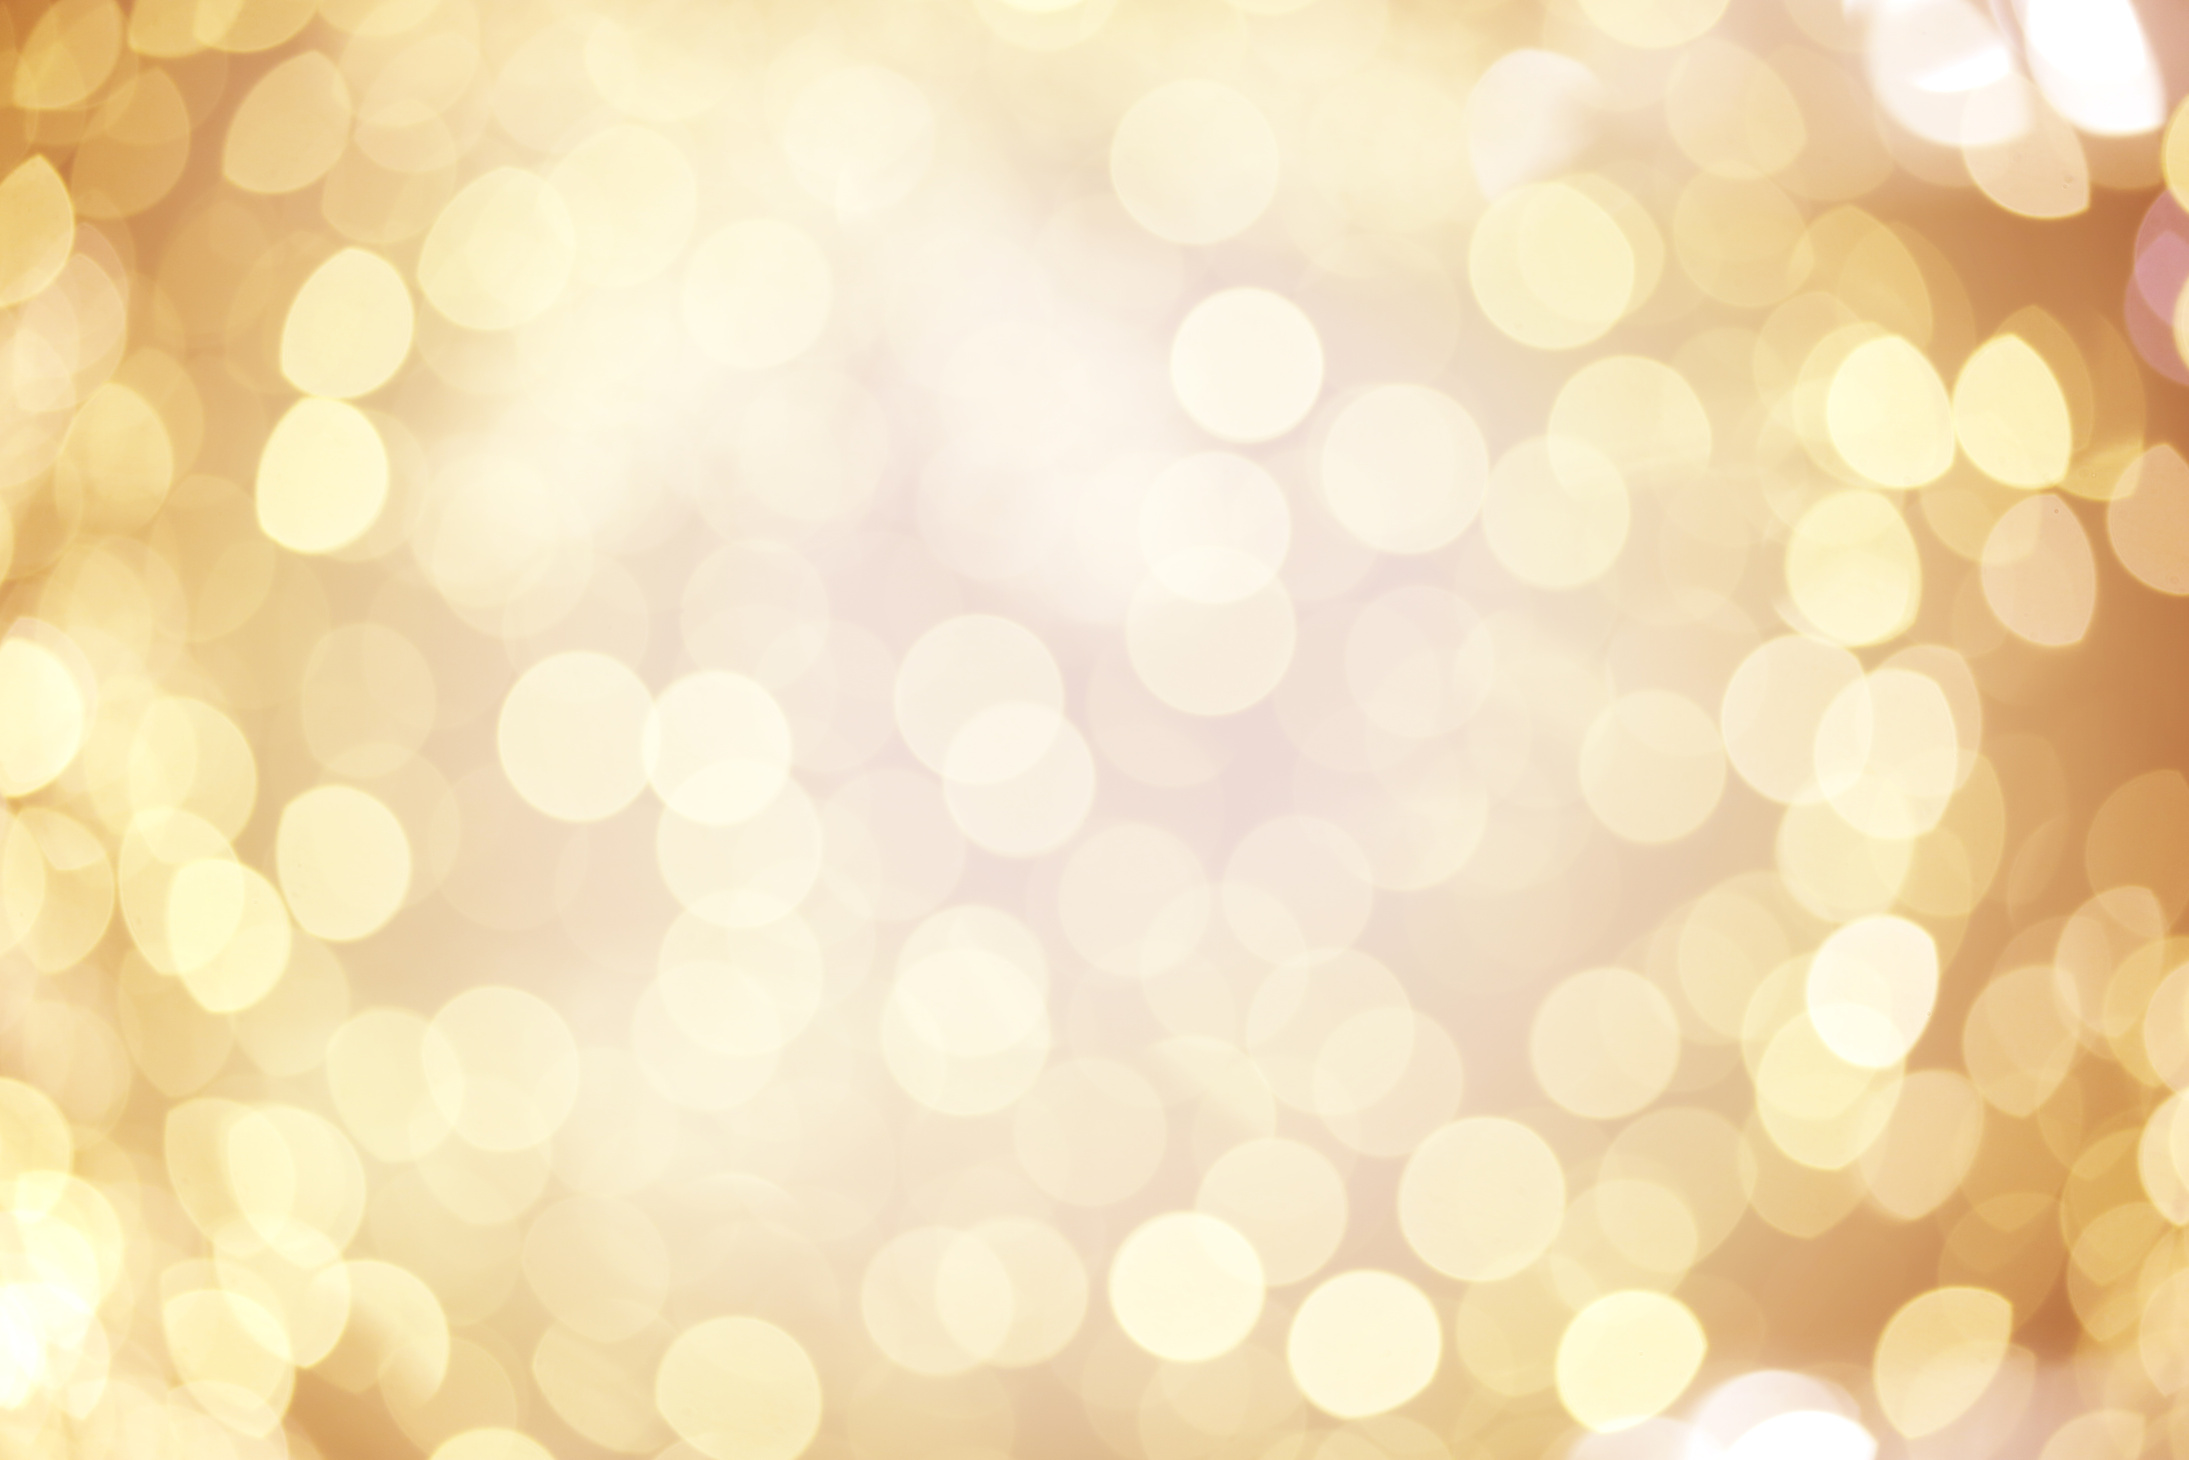 Blurred gold sparkles background